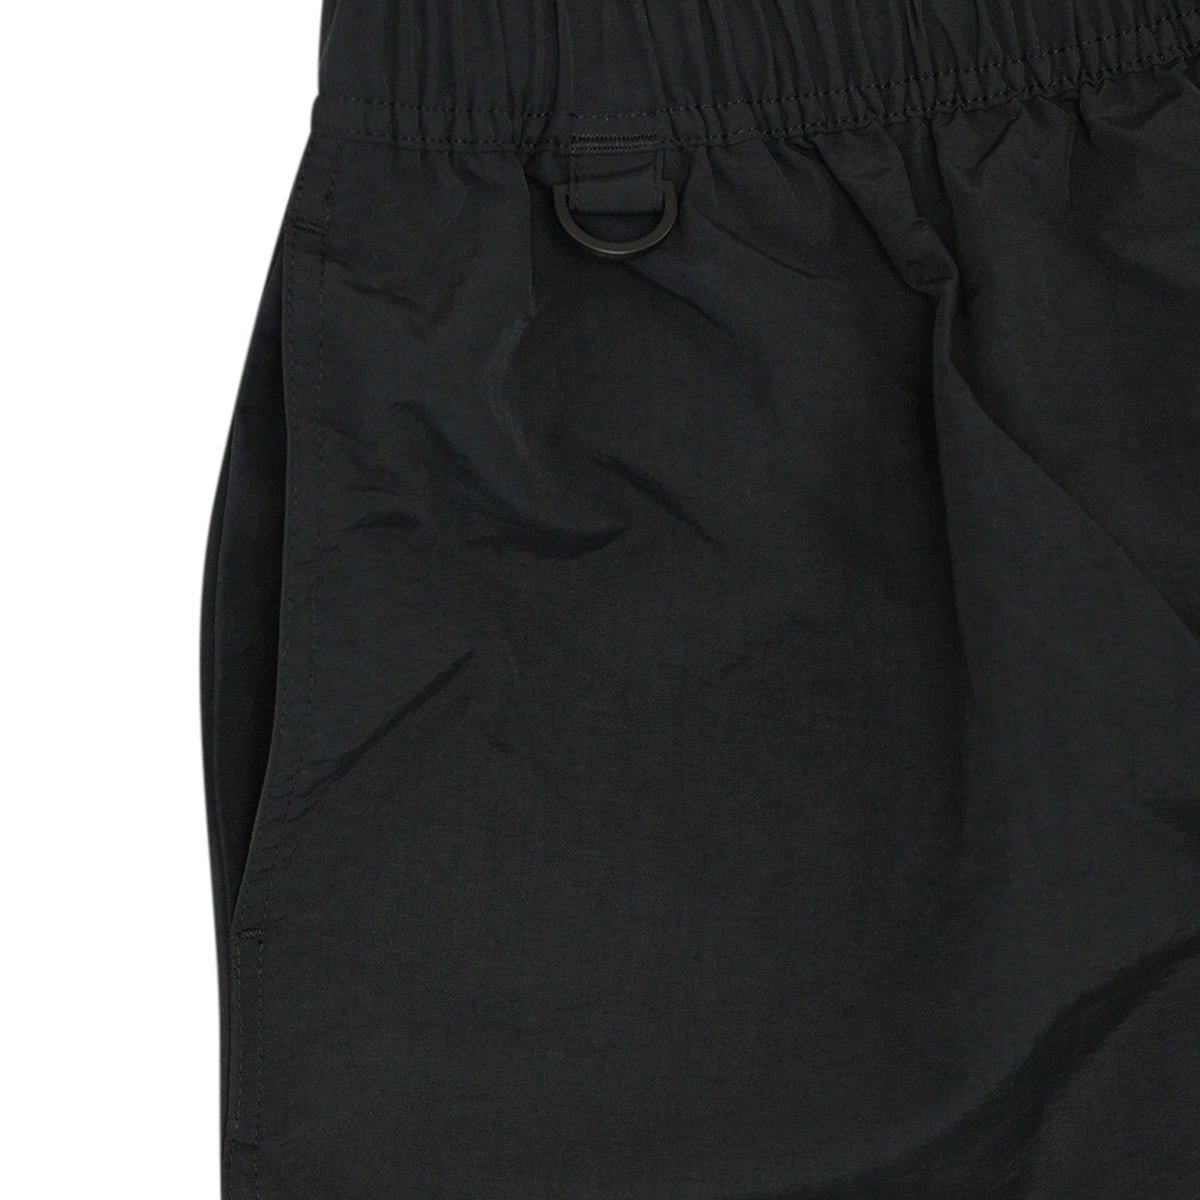 active nylon shorts【black】 - Arch ☆ アーチ [バスケットボール＆ライフスタイルウェア  Basketball&Lifestyle wear]